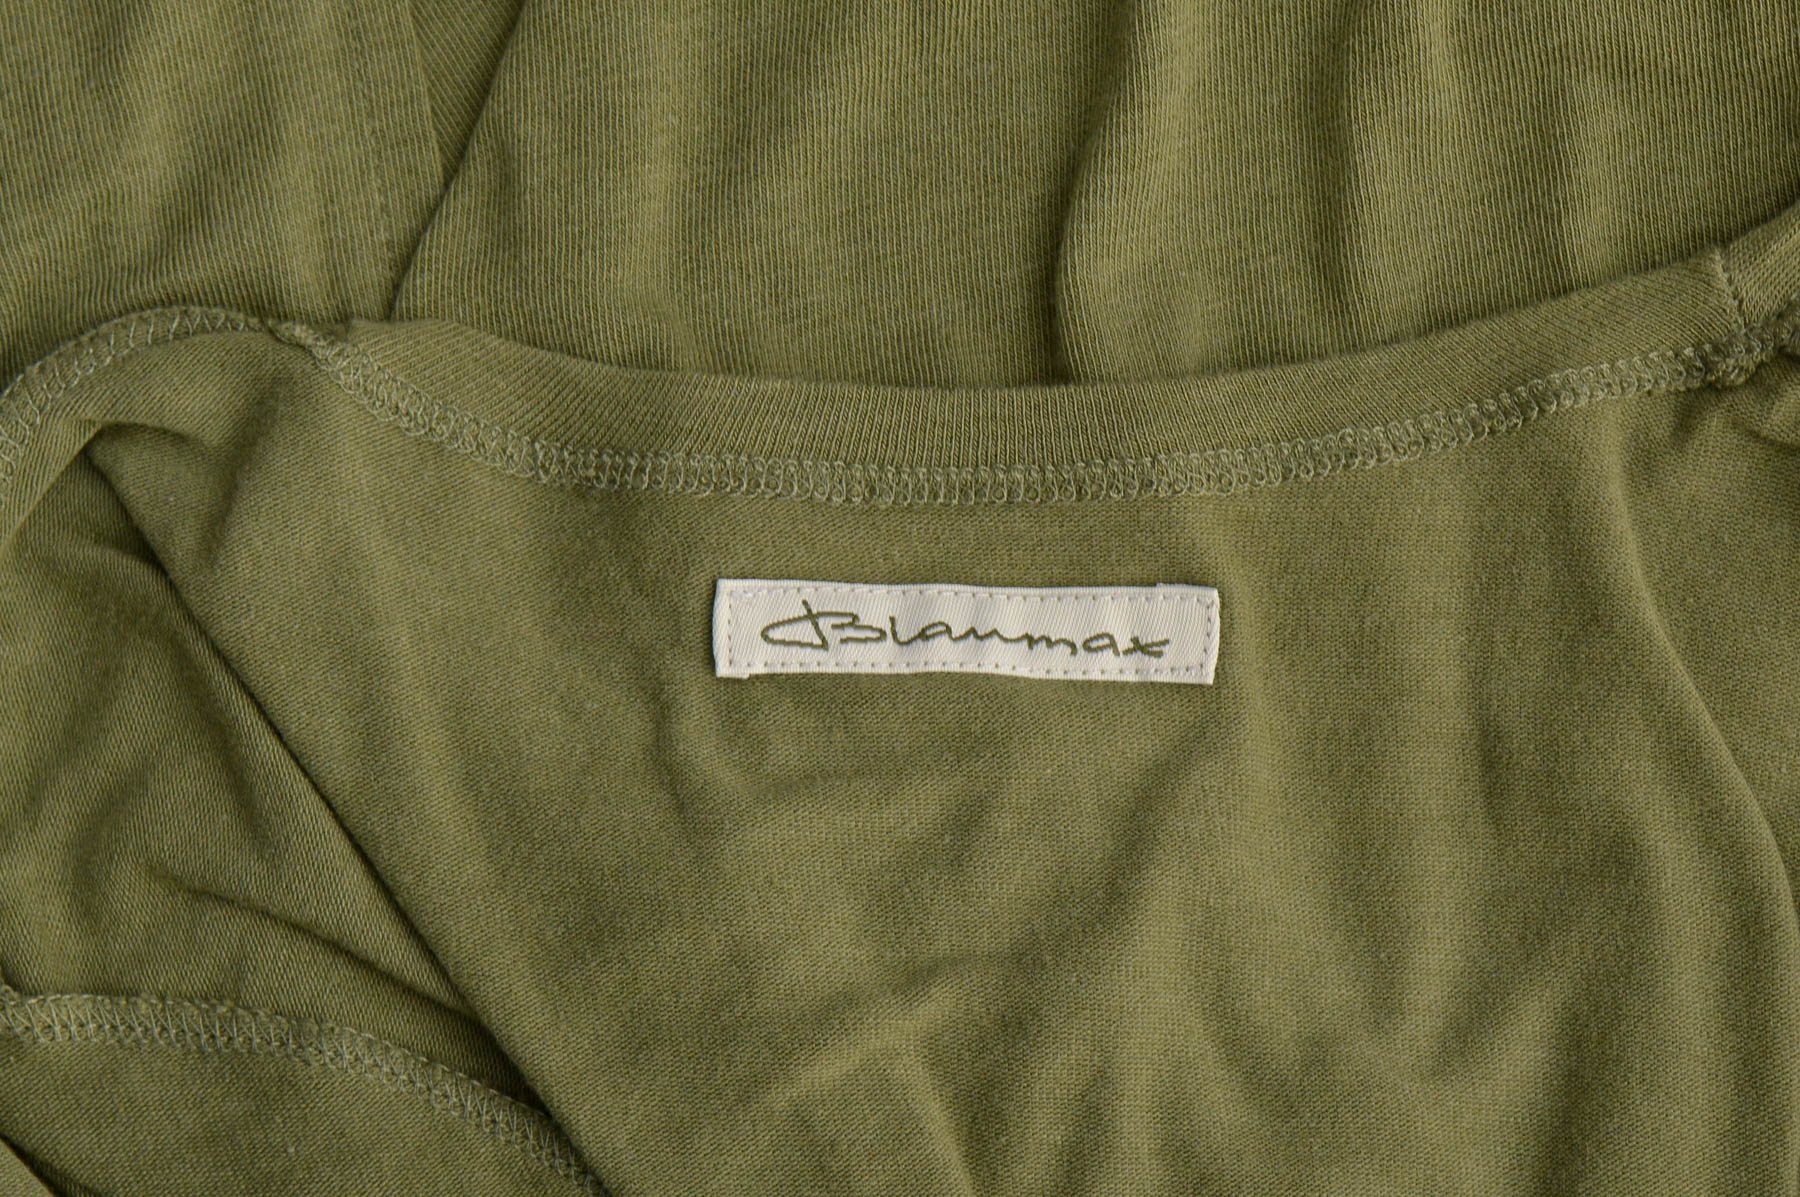 Cardigan / Jachetă de damă - Blaumax - 2